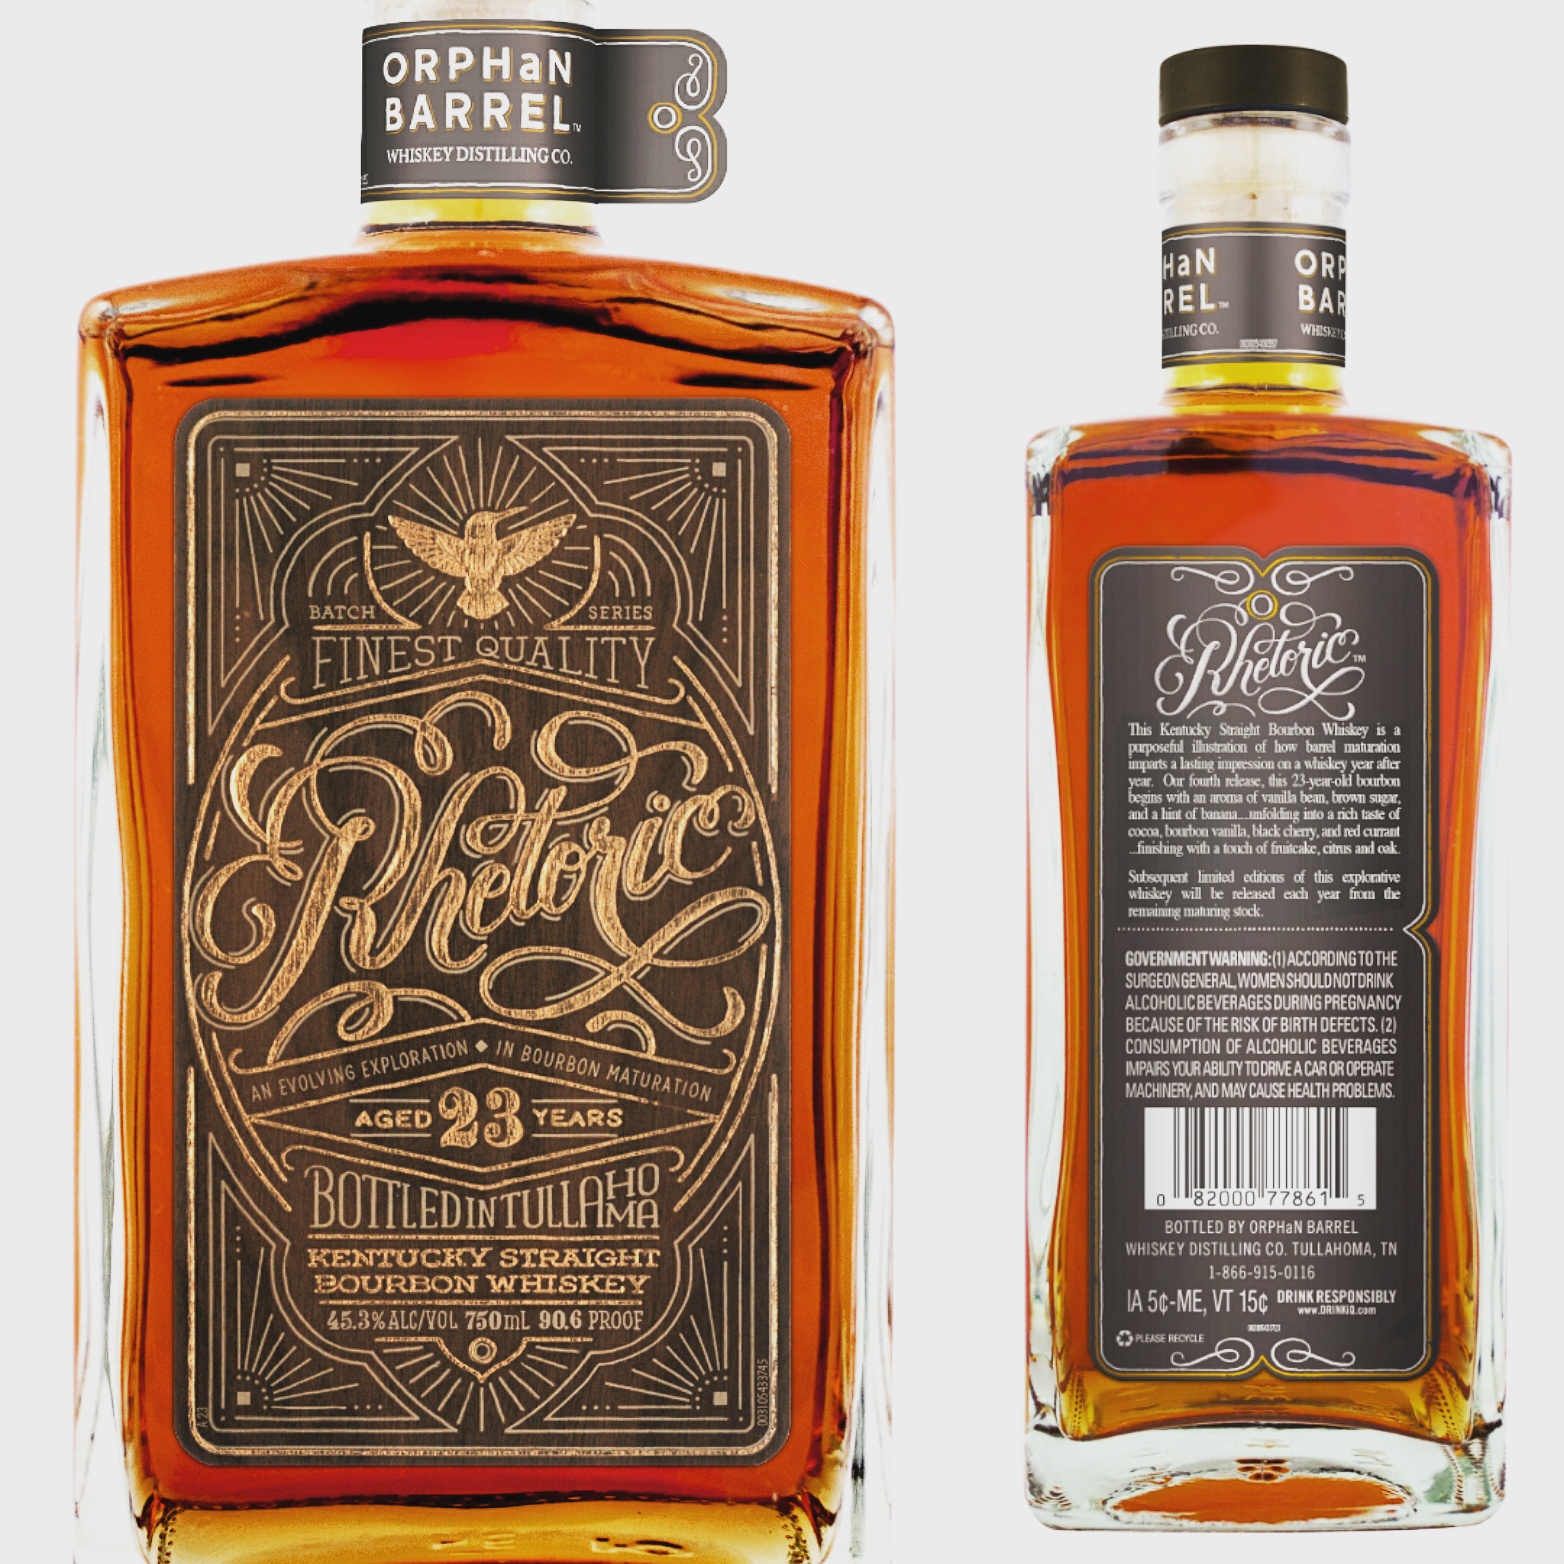 Fierce Rhetoric: 23 Year Old Bourbon from Orphan Barrel Whisky co.